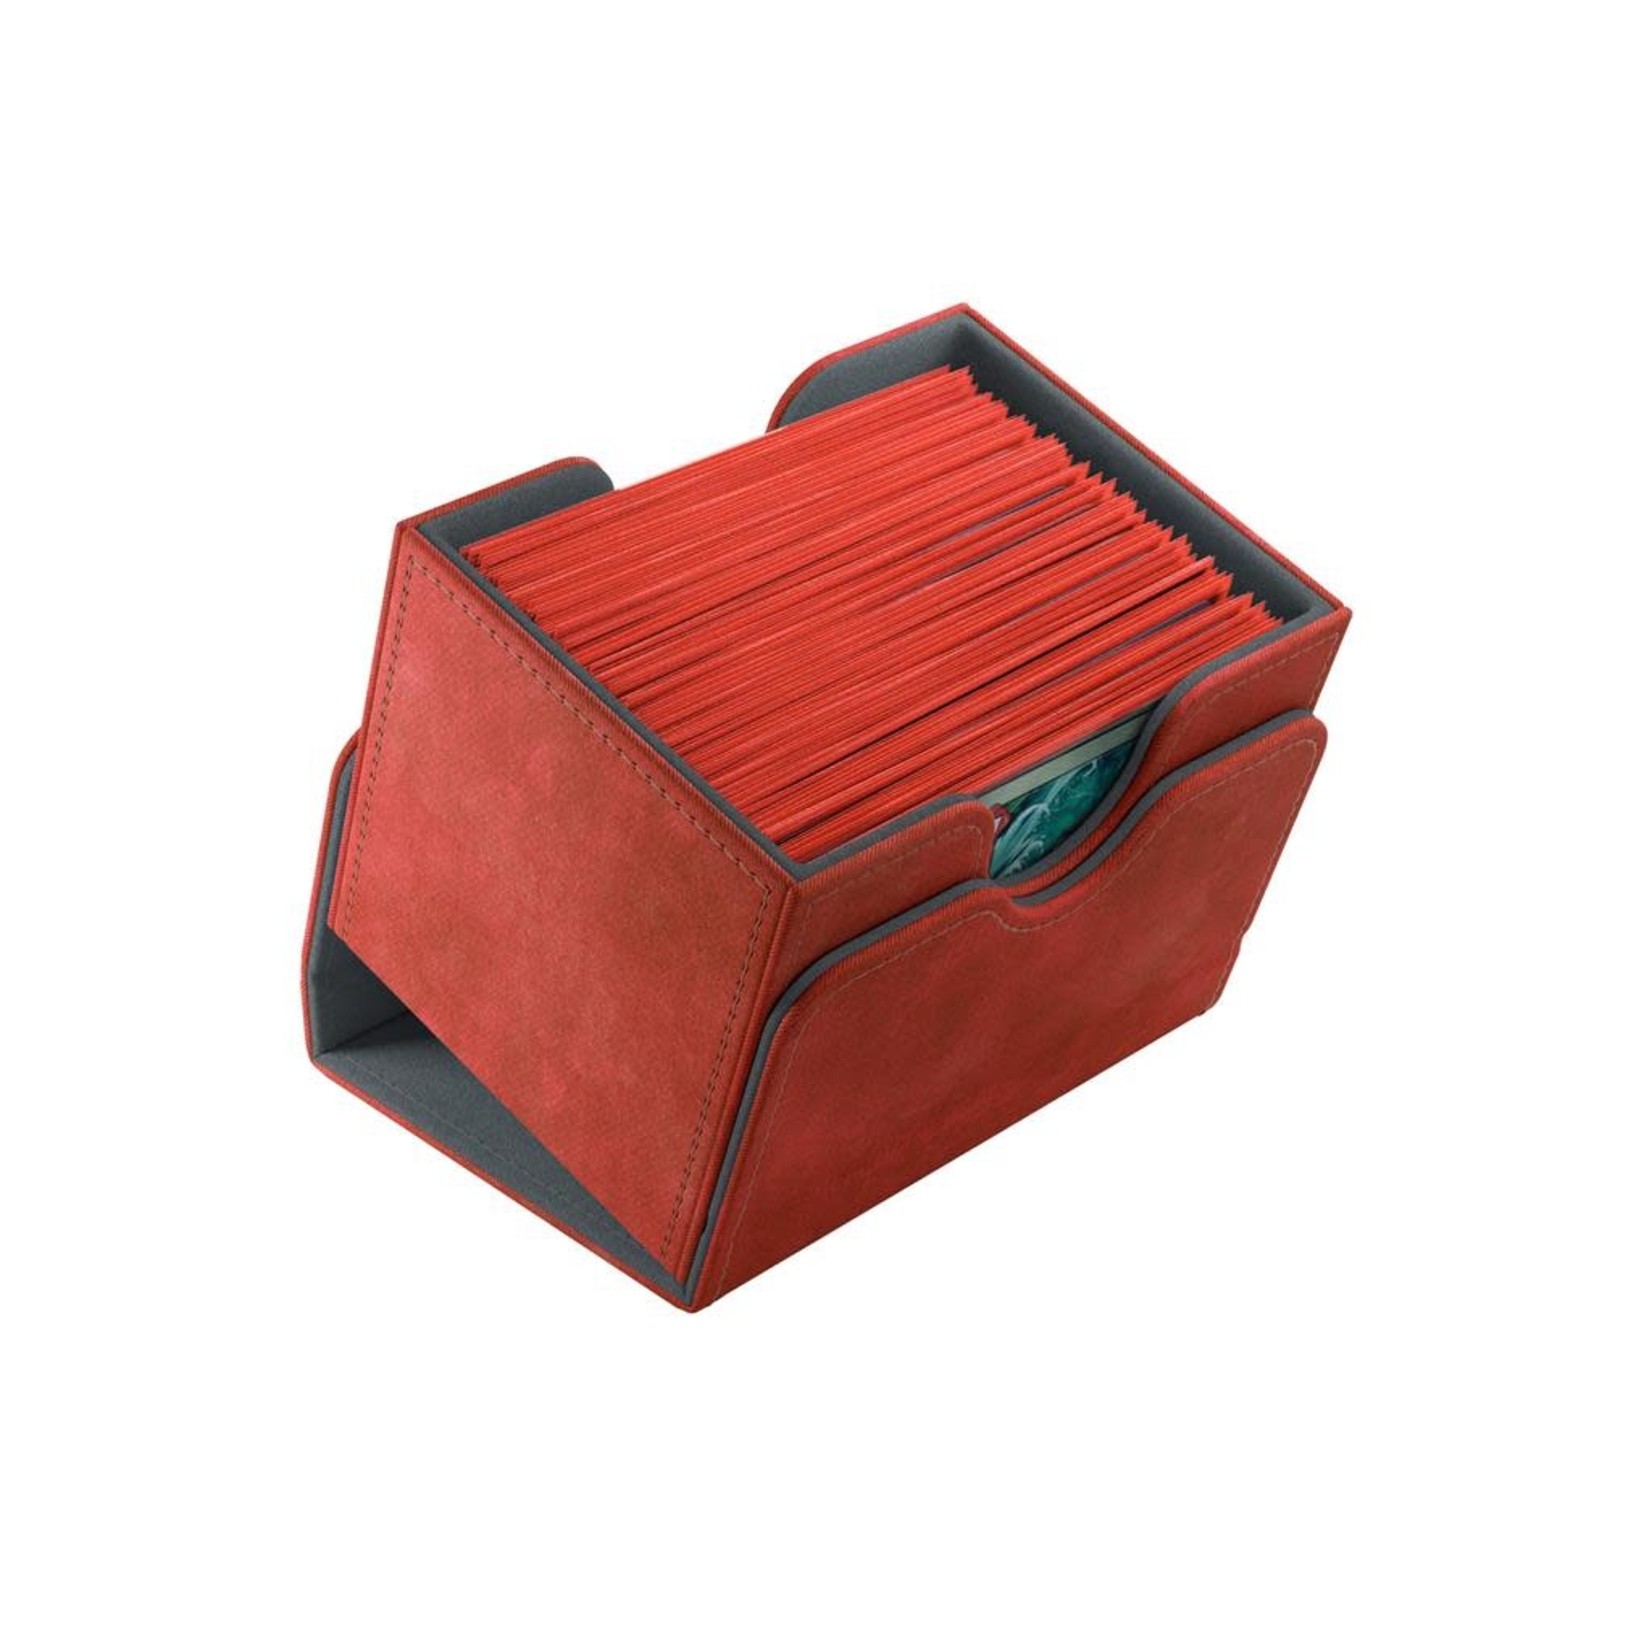 Gamegenic Sidekick Deck Box 100+: Red